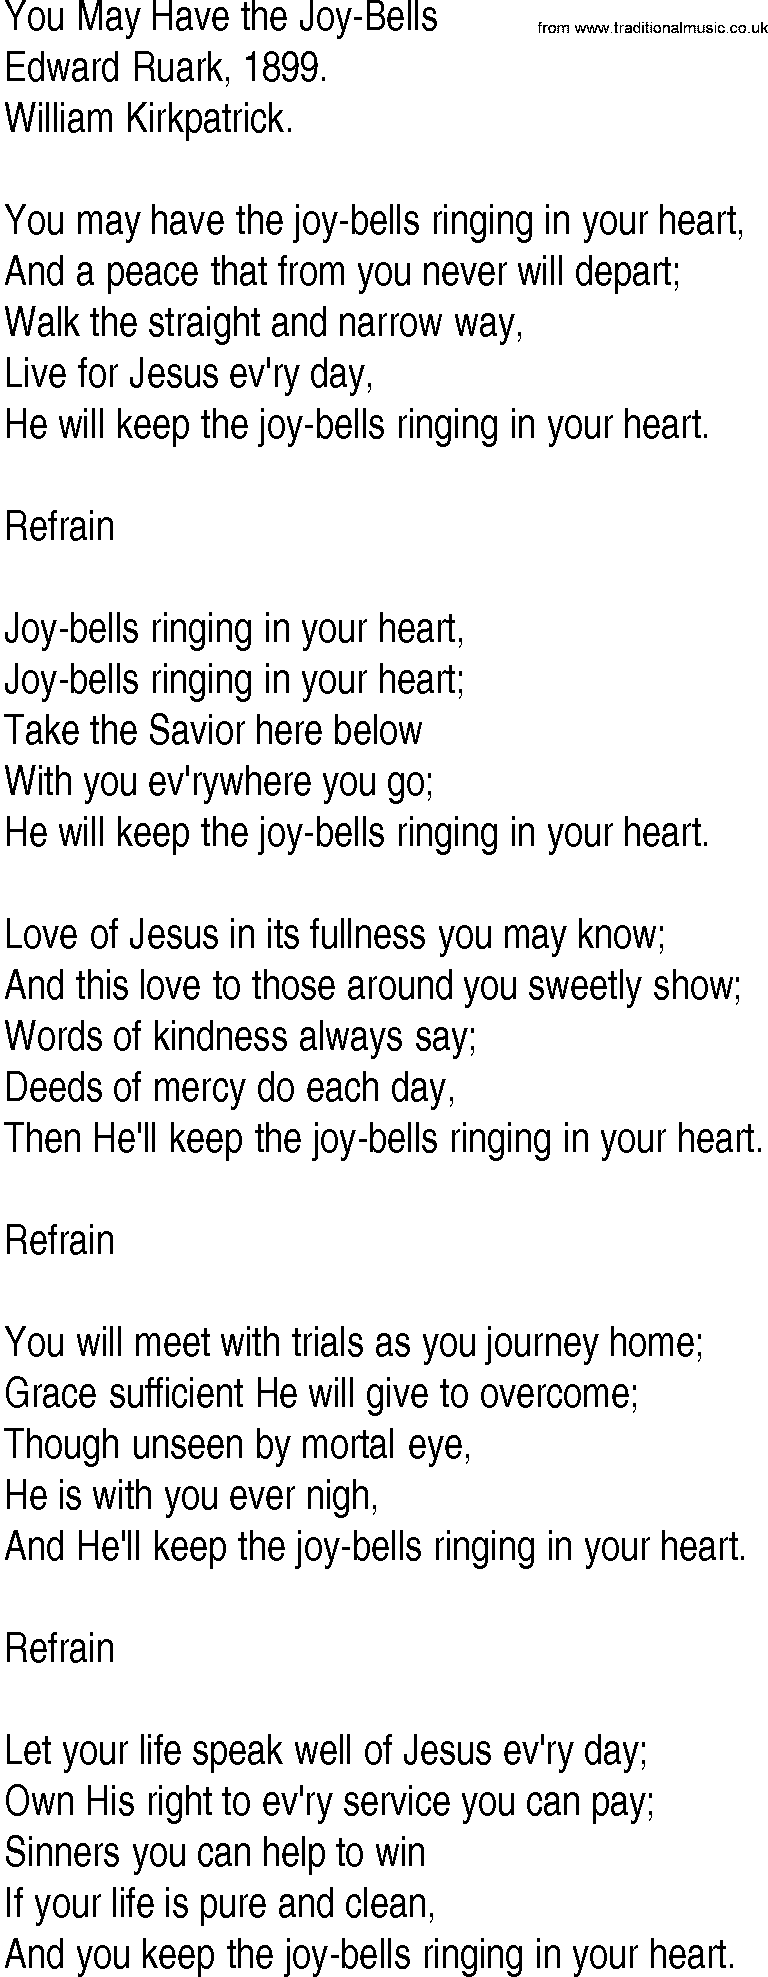 Hymn and Gospel Song: You May Have the Joy-Bells by Edward Ruark lyrics